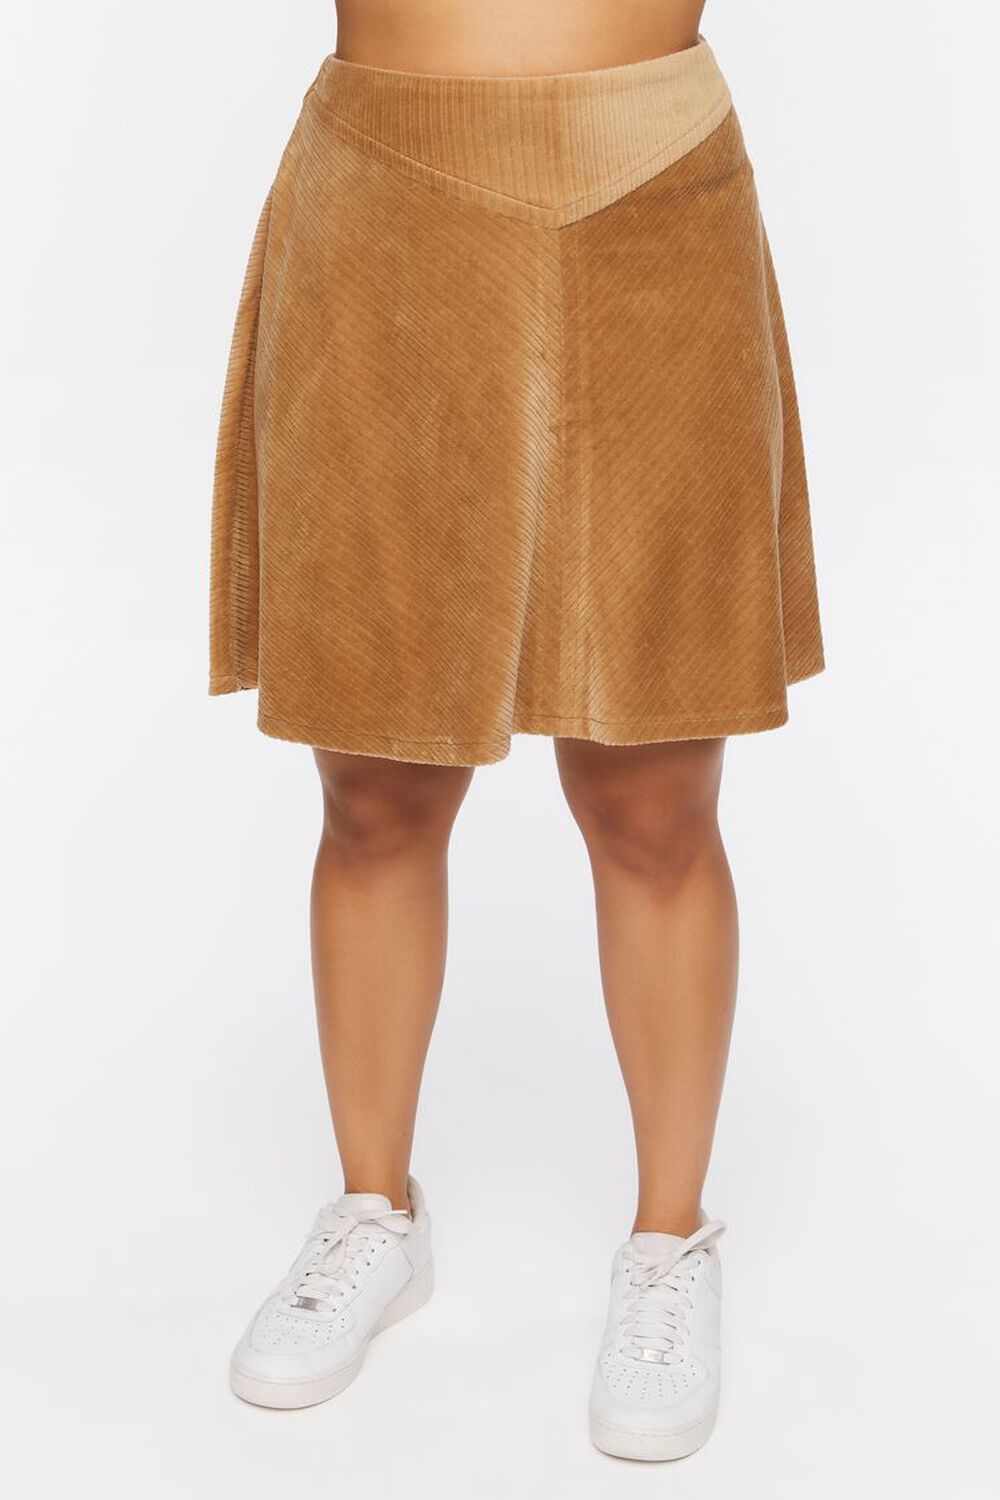 TOAST Plus Size Corduroy Mini Skirt, image 2